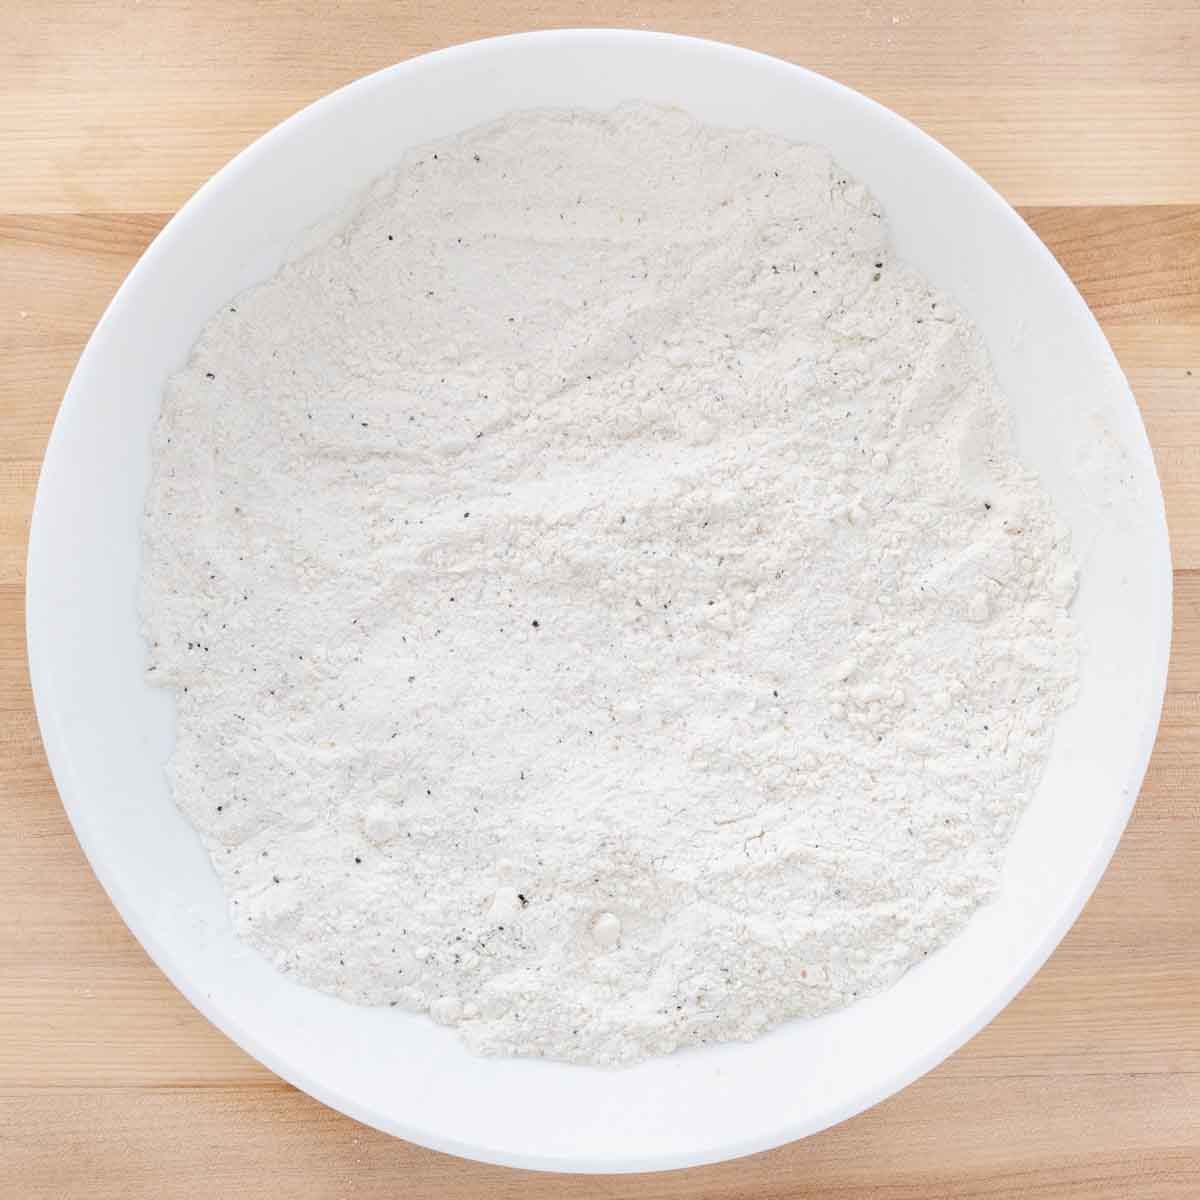 seasoned flour in a white bowl.